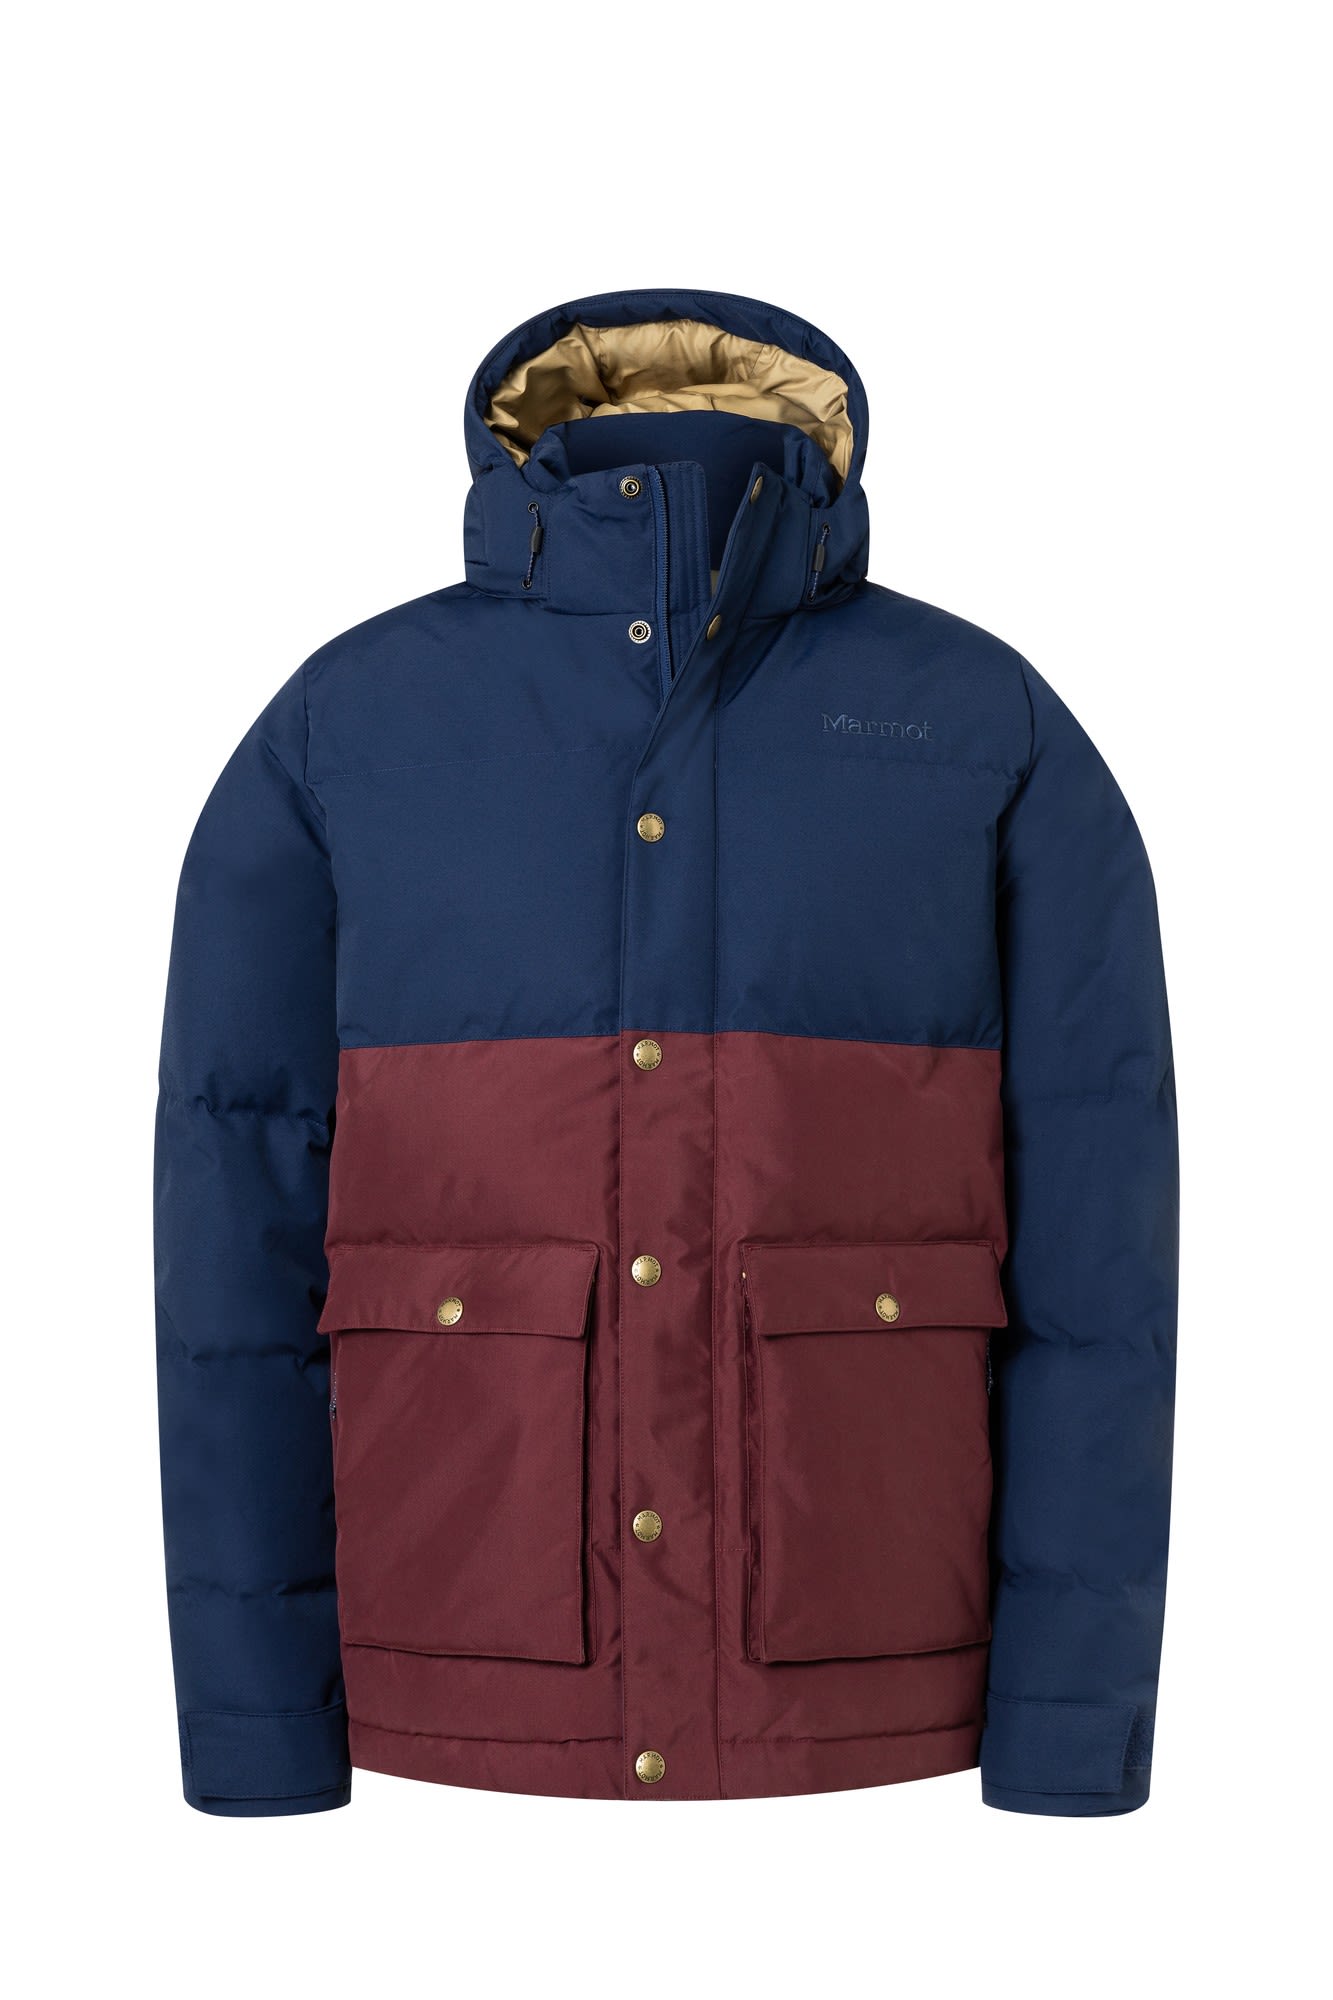 Marmot Fordham Jacket Colorblock - Blau - Rot- Male Daunen Ponchos und Capes- Grsse S - Farbe Arctic Navy - Port Royal